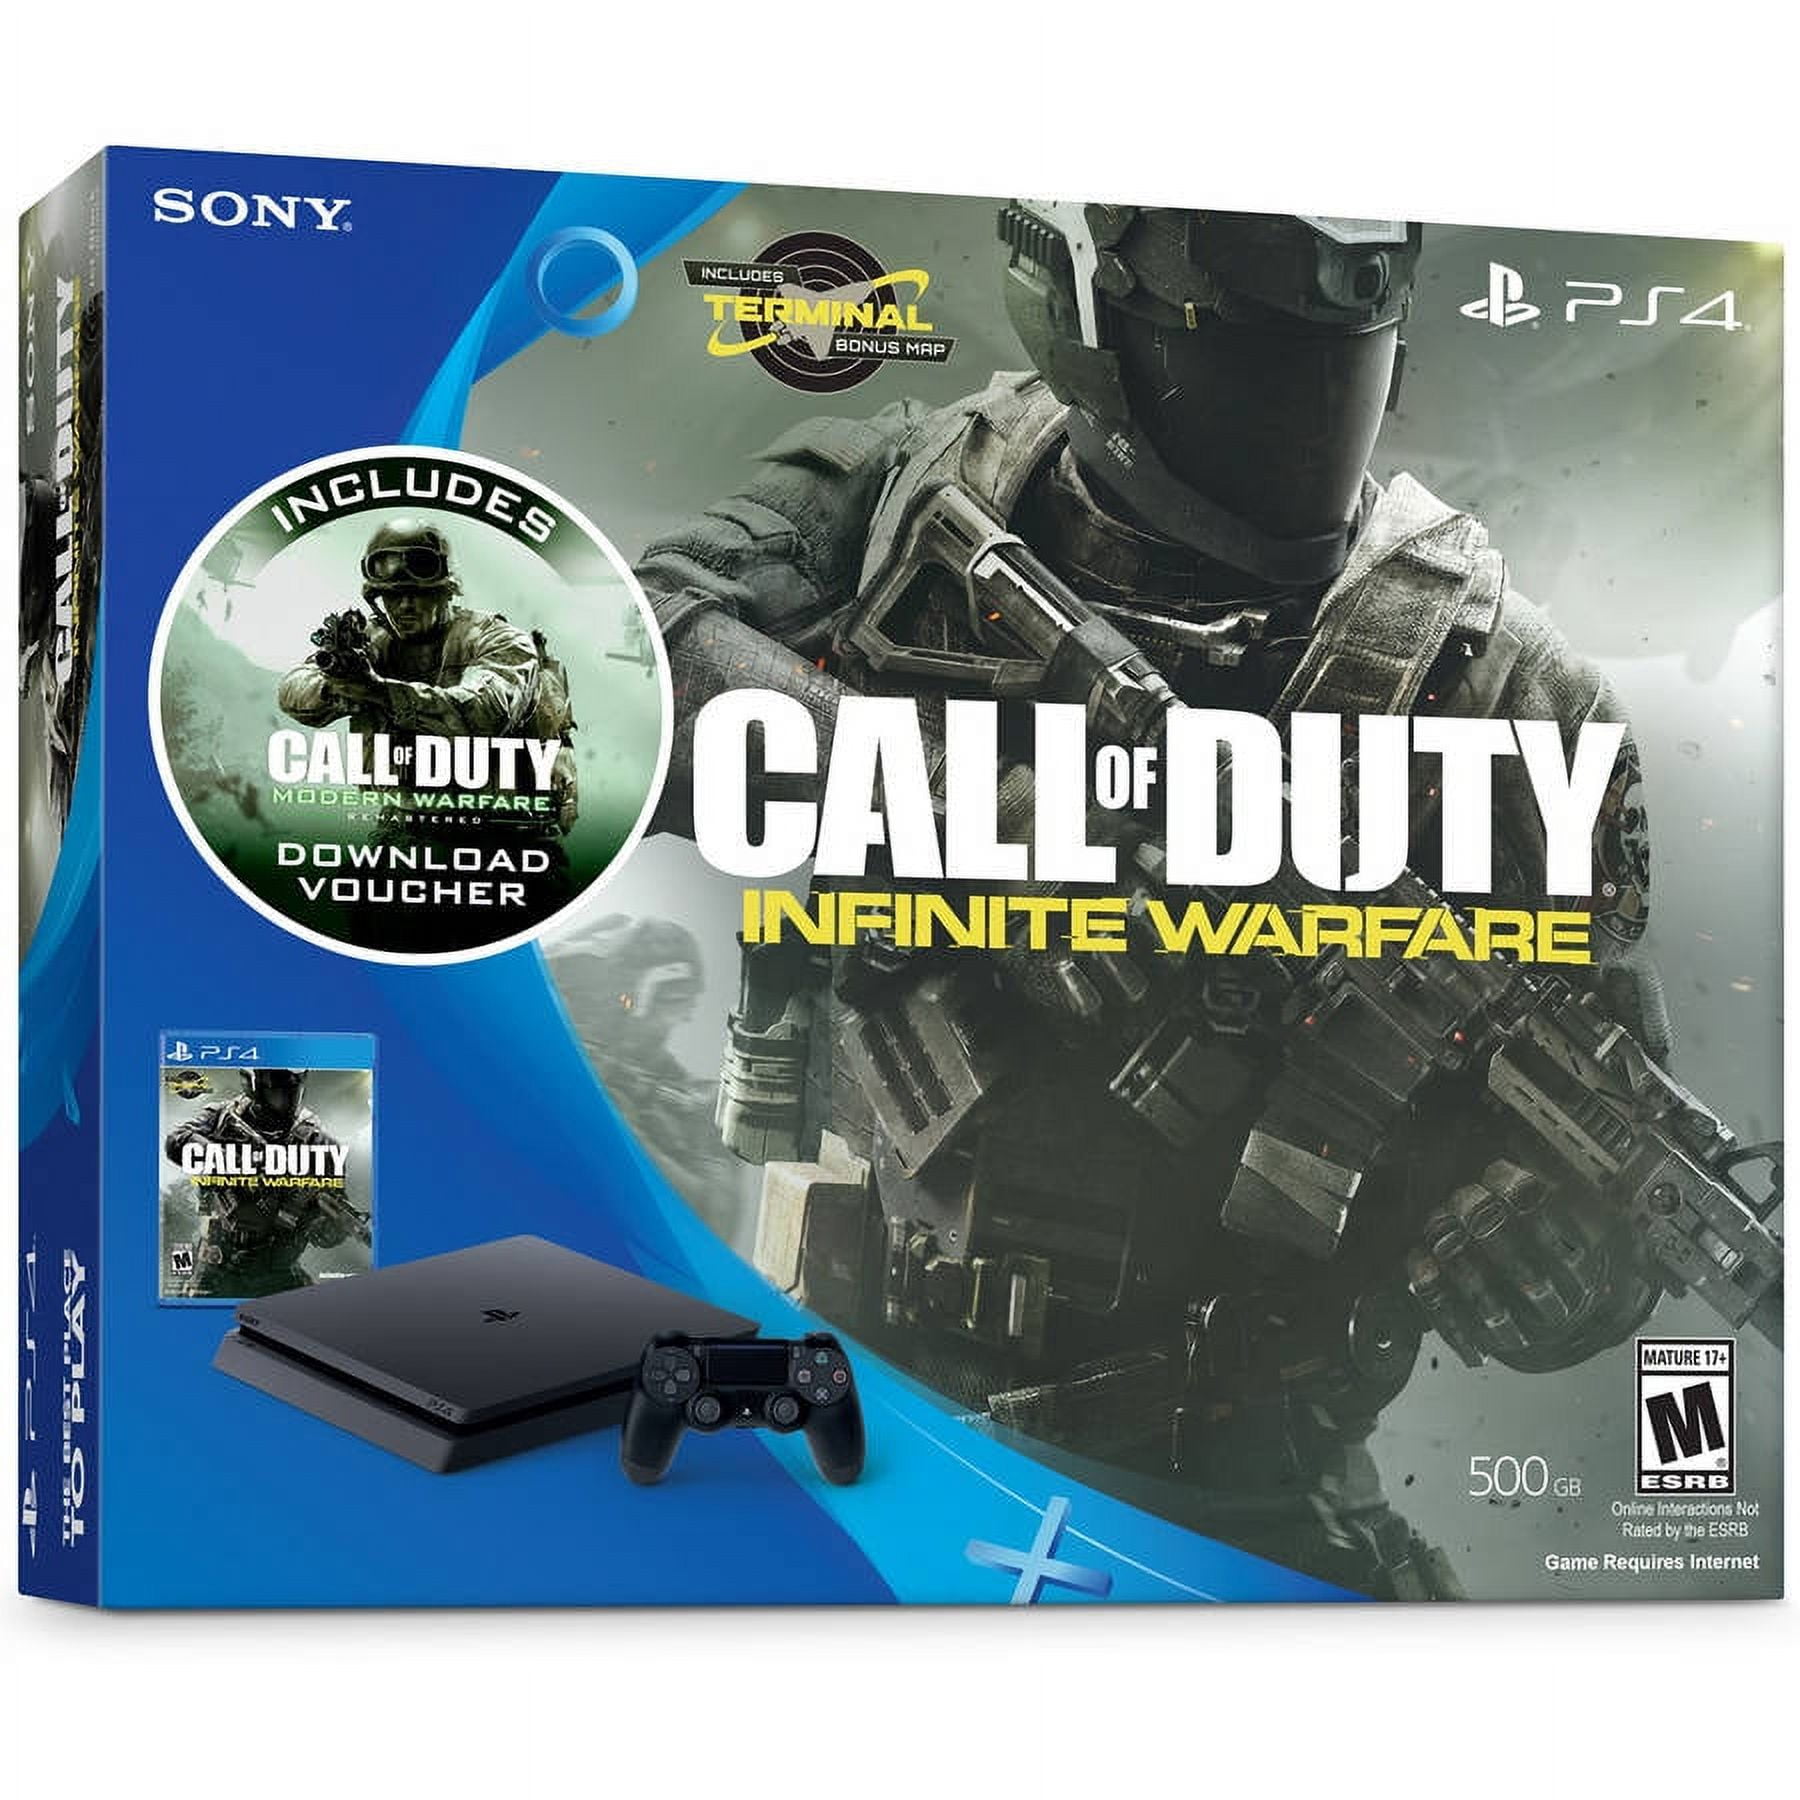 Call of Duty Infinite Warfare + WWII bundle (PS4) 